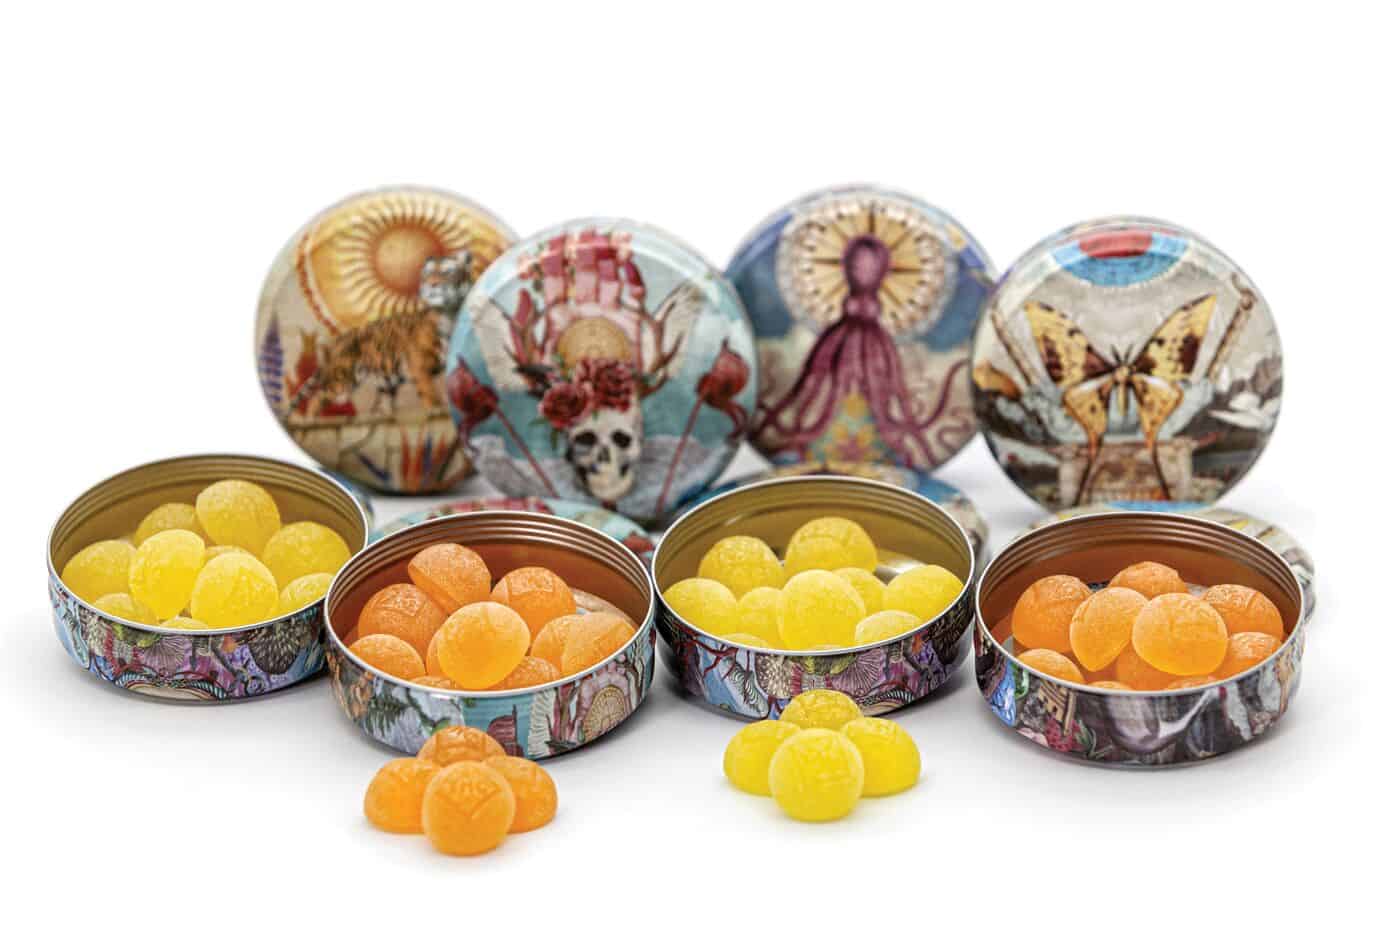 Binske edible gummy tins with psychadelic designs